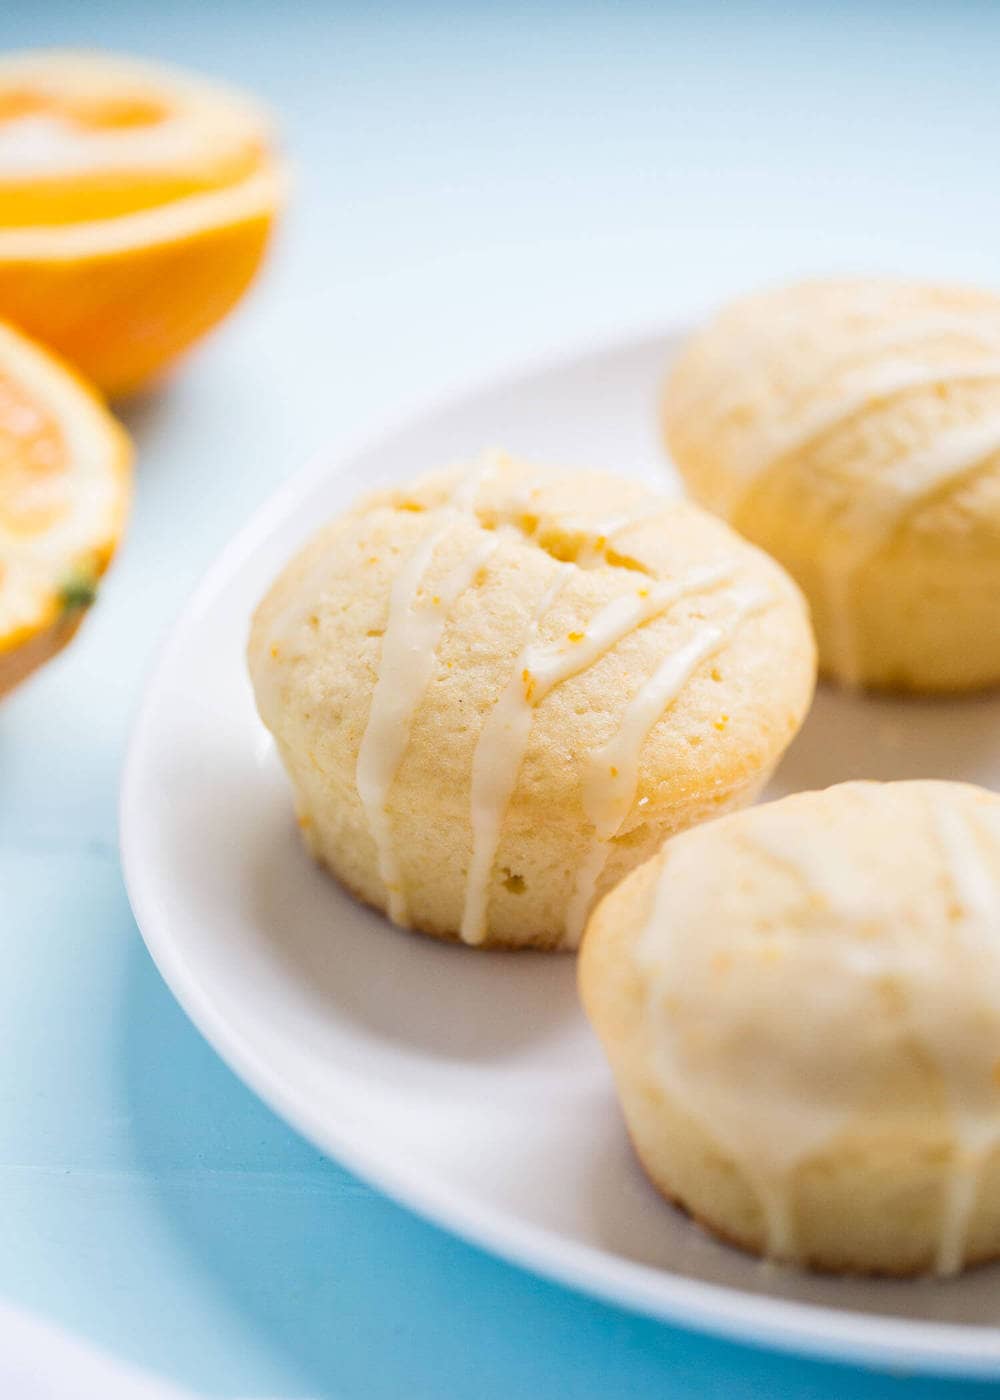 Glazed orange muffins on a white plate.